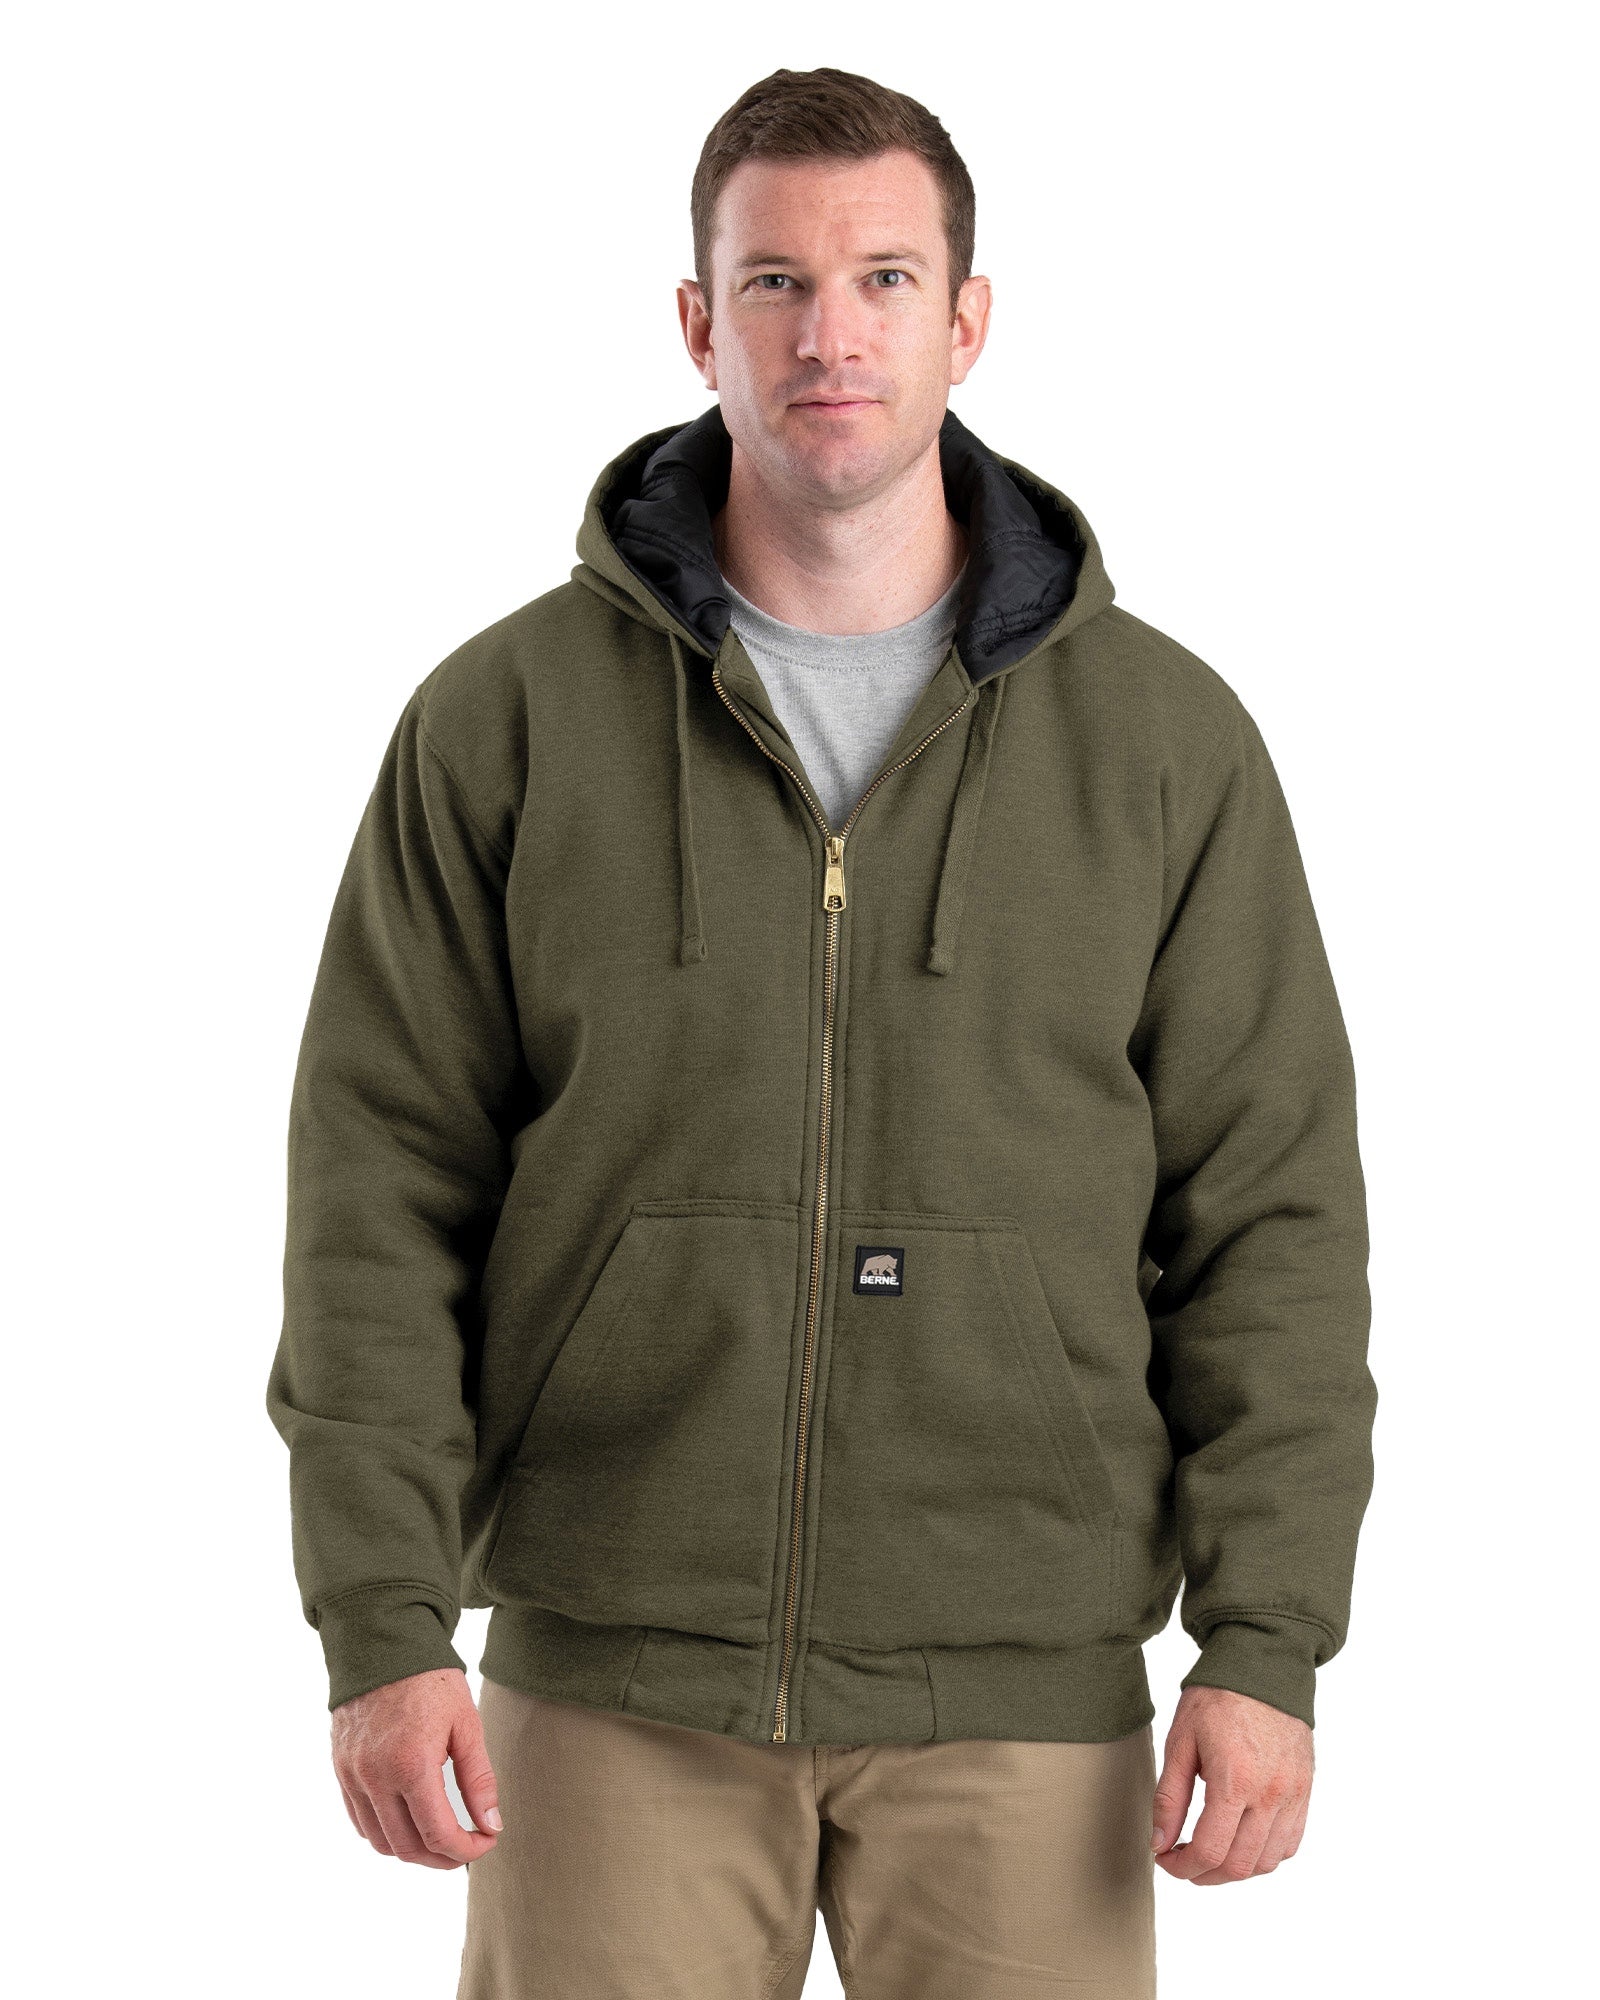 SZ612CDG Highland Insulated Full-Zip Hooded Sweatshirt